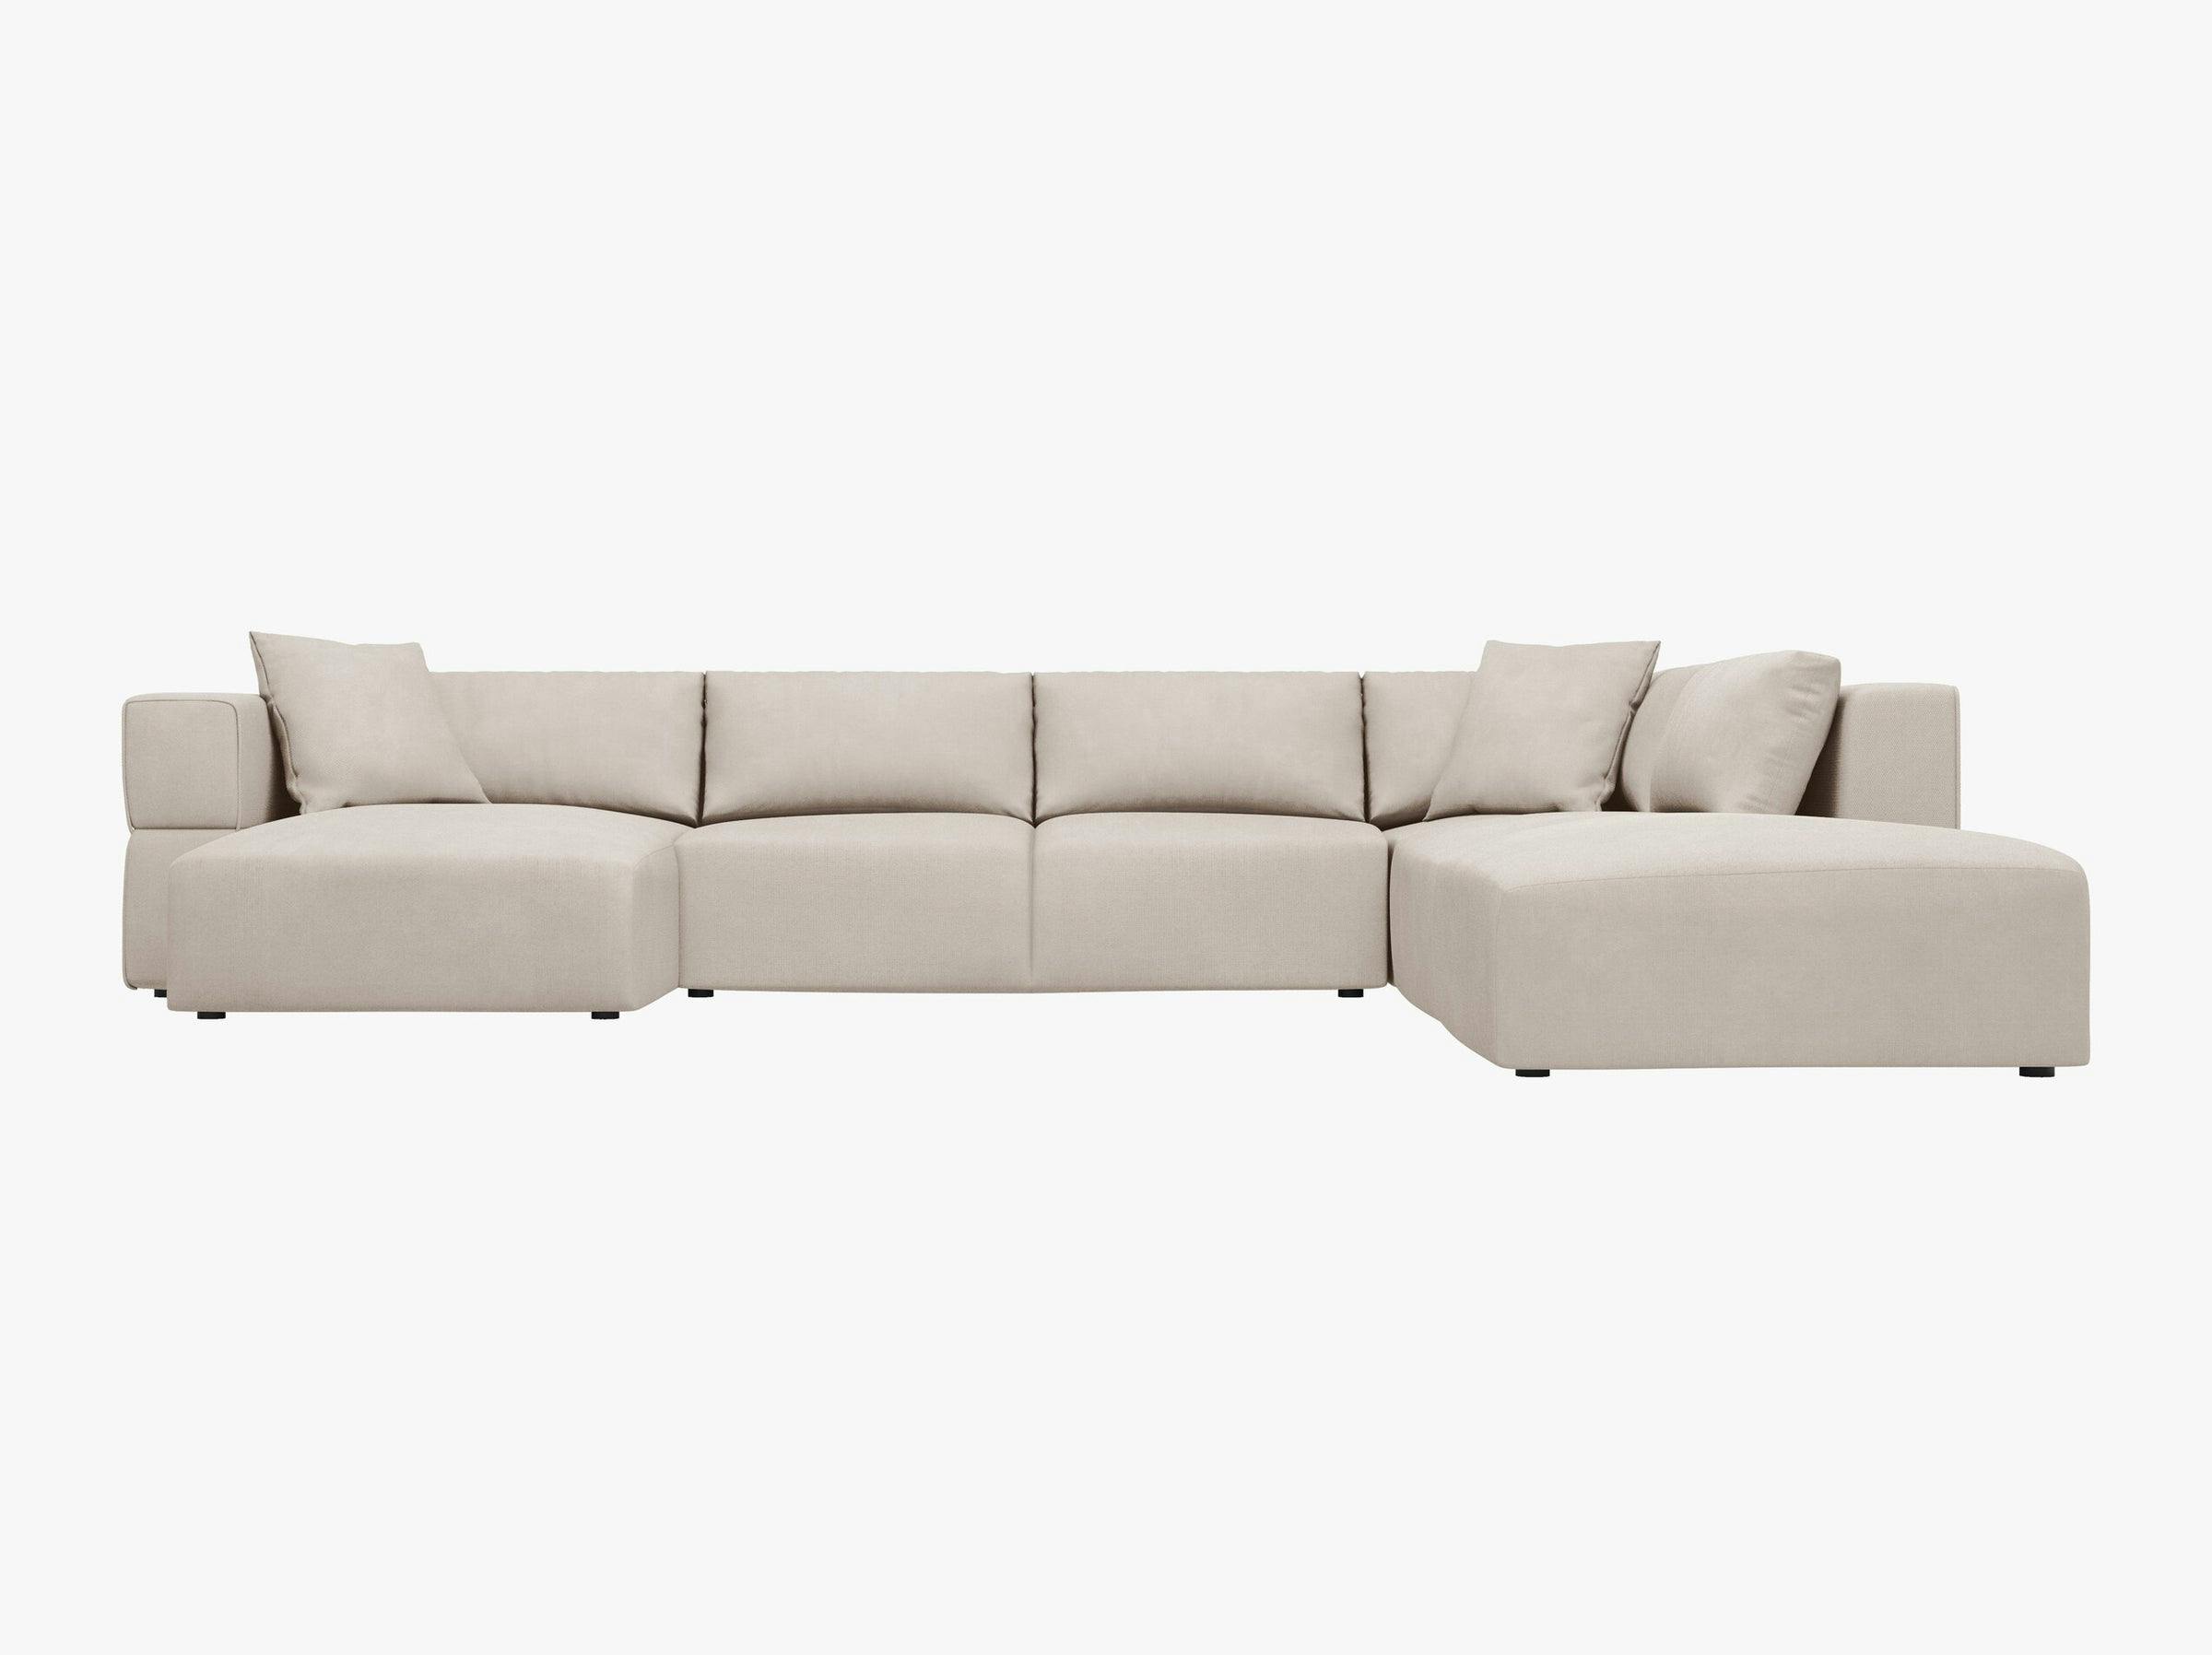 Tyra sofás tessuto strutturato beige